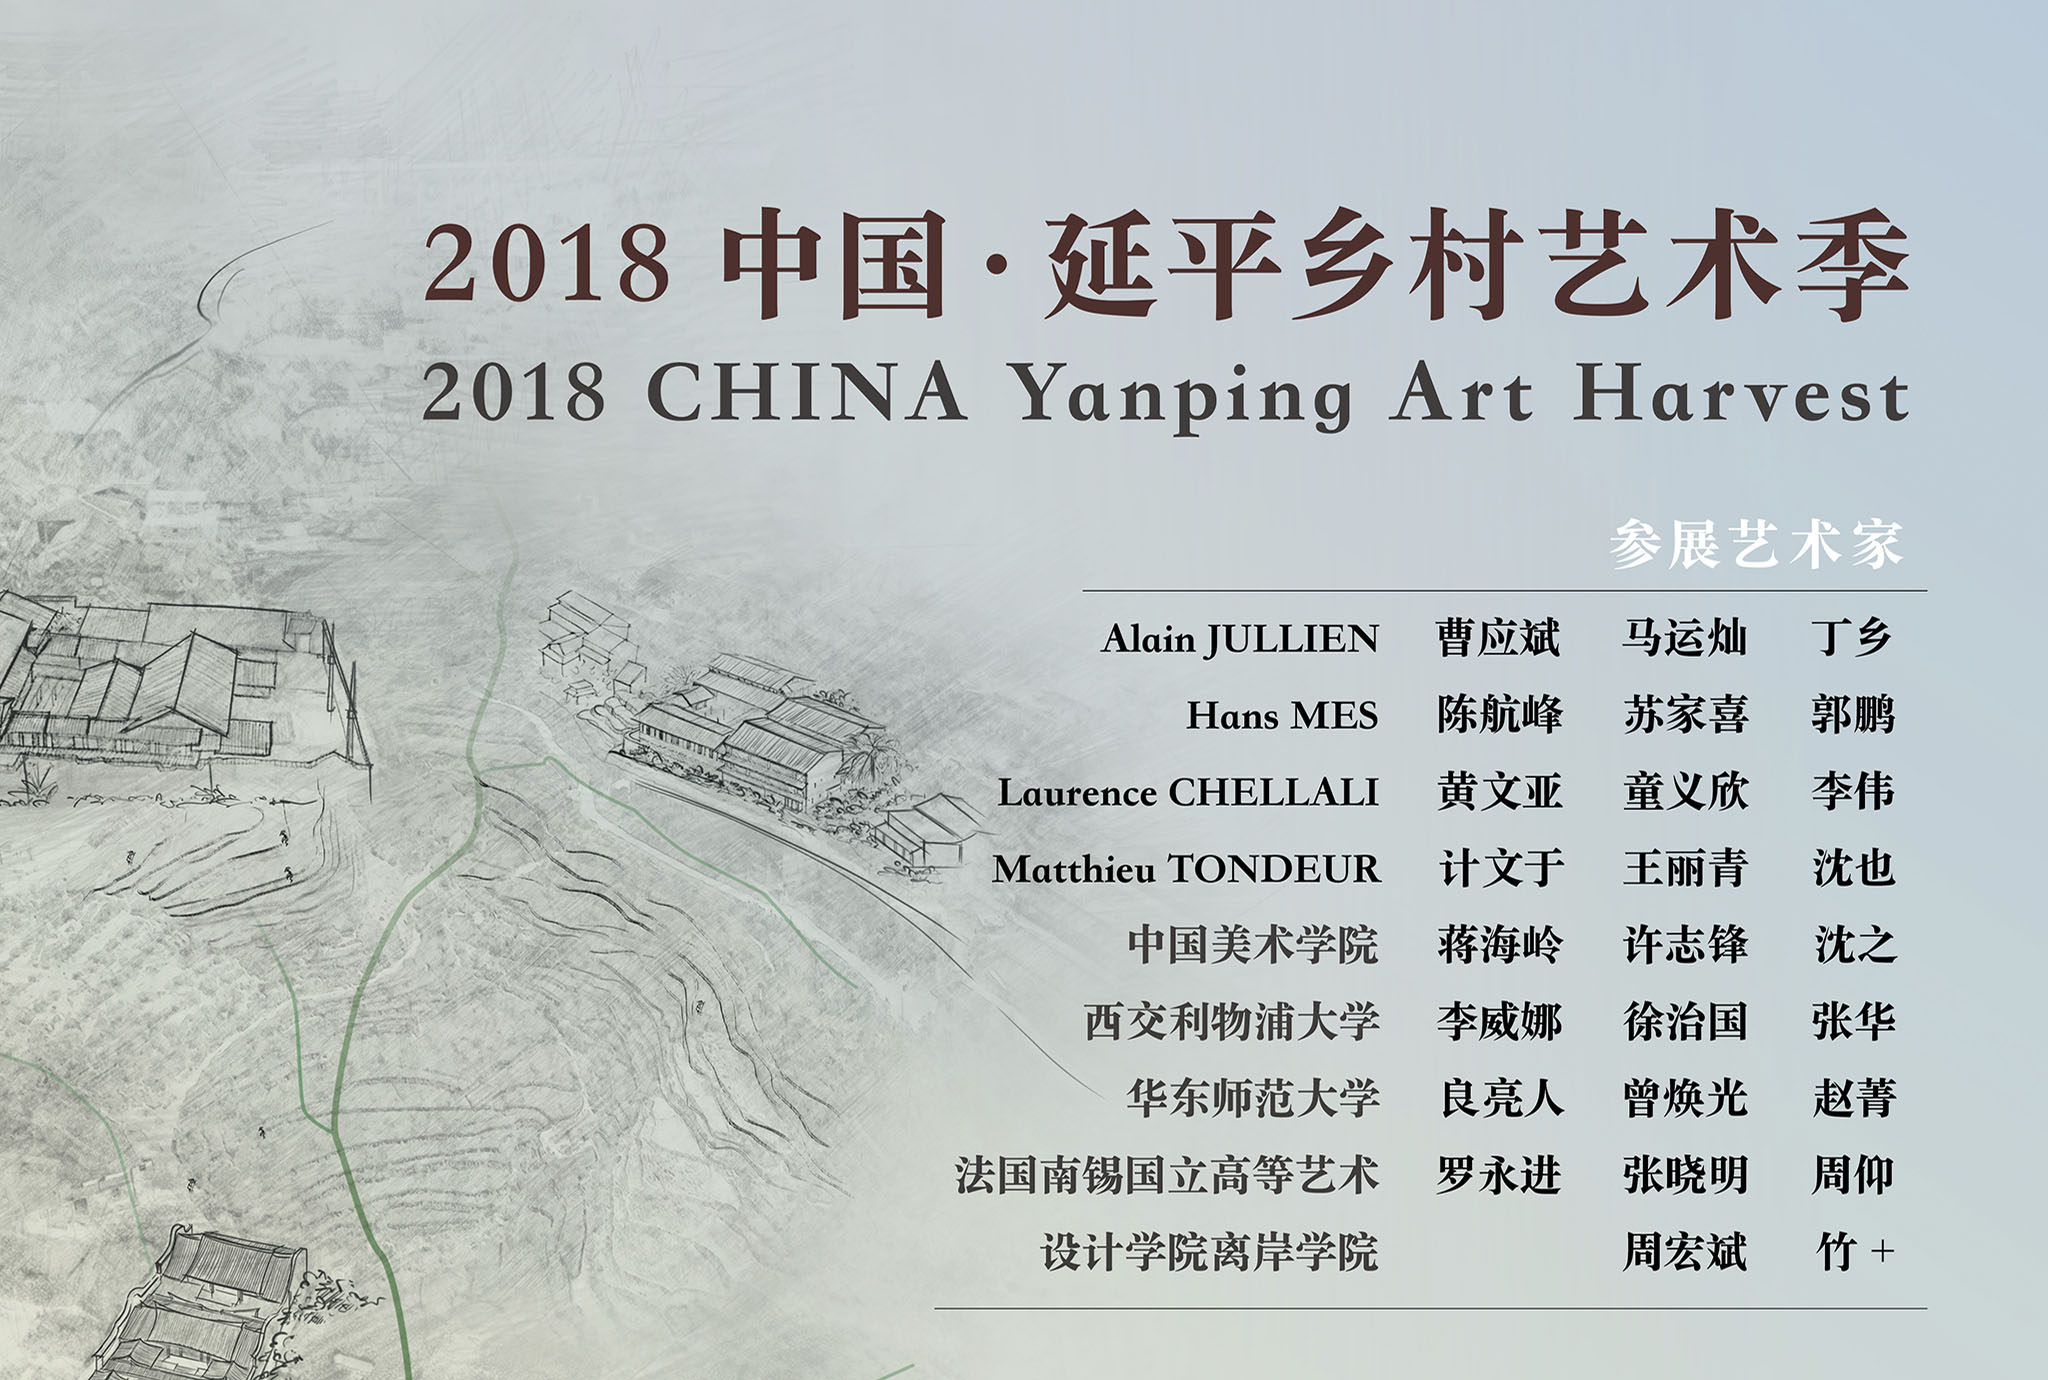 2018 CHINA Yanping Art Harvest